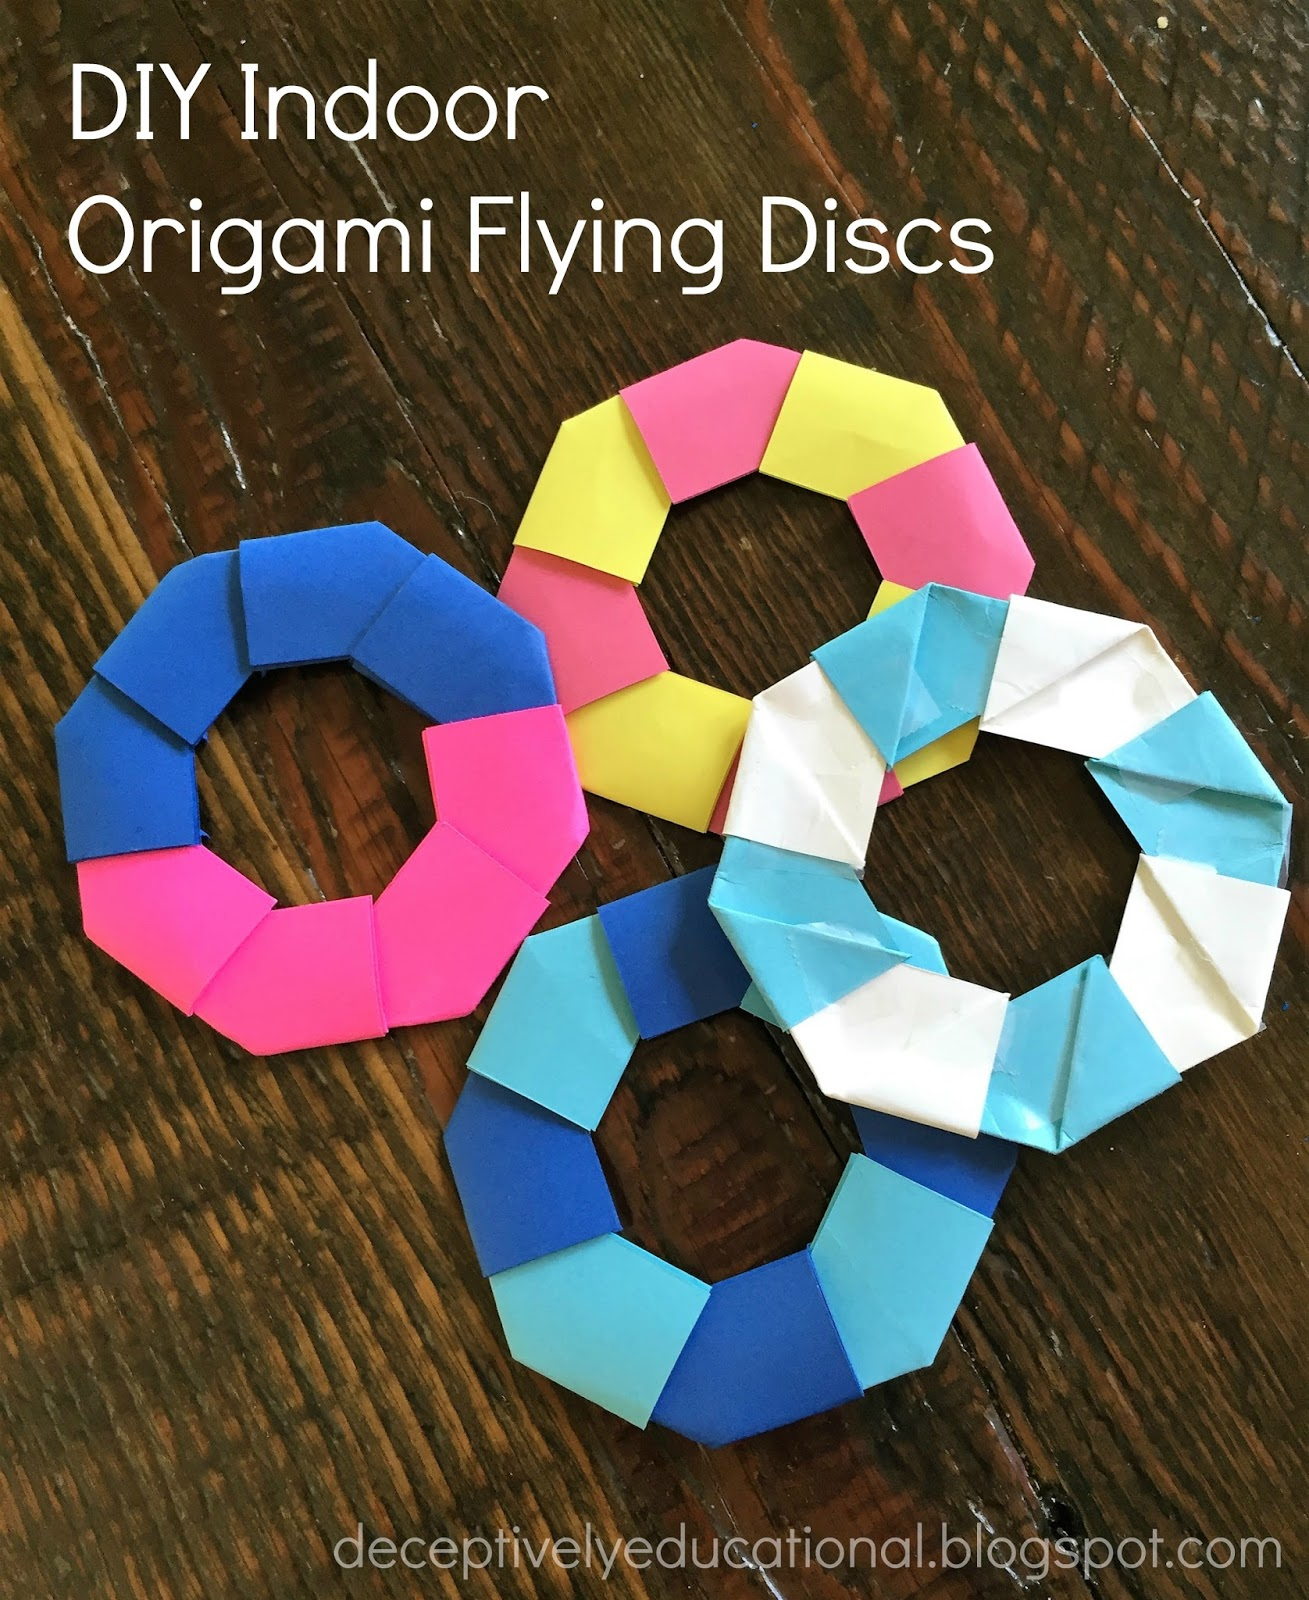 Origami Flying Dinosaur Diy Indoor Origami Flying Discs Relentlessly Fun Deceptively